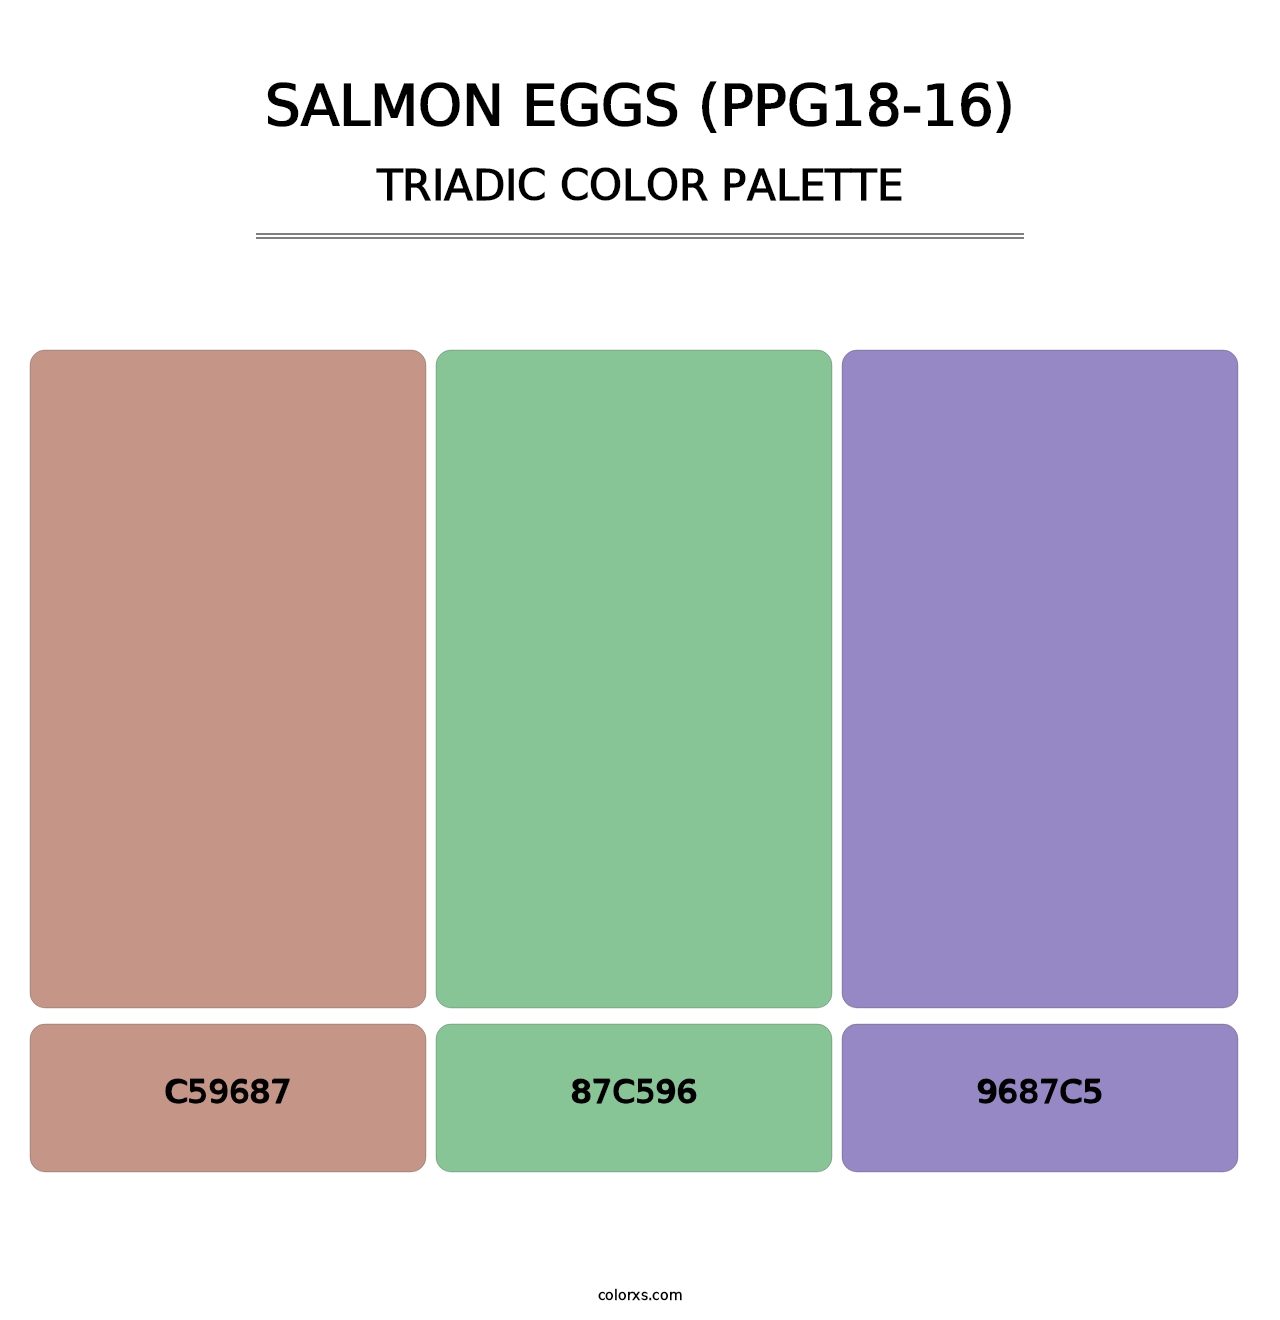 Salmon Eggs (PPG18-16) - Triadic Color Palette